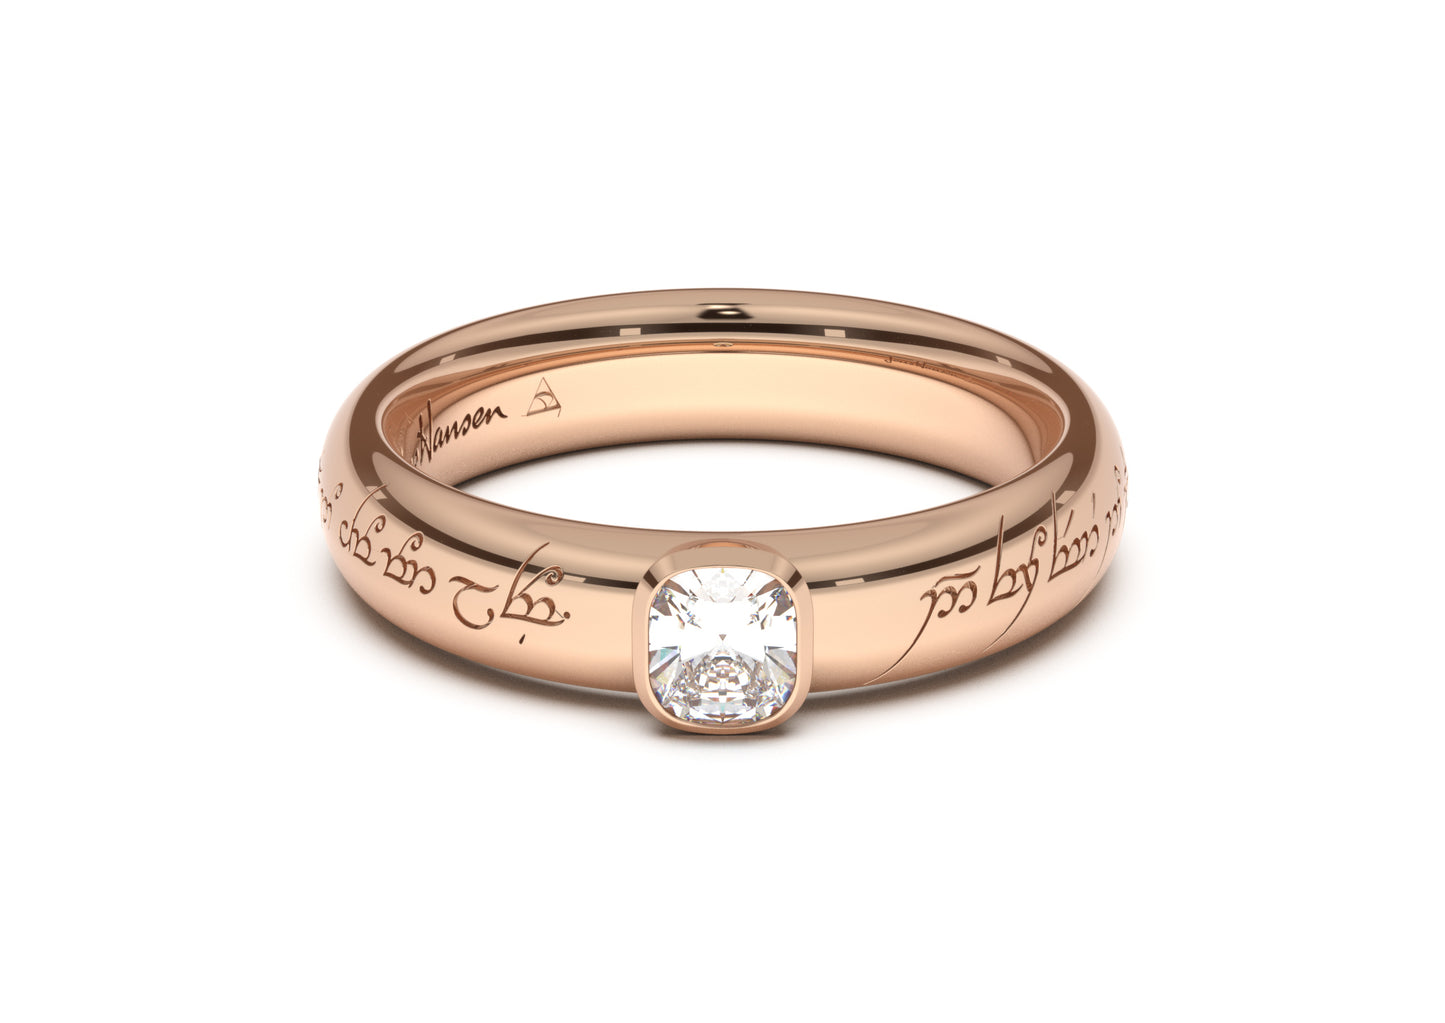 Cushion Elegant Elvish Engagement Ring, Red Gold